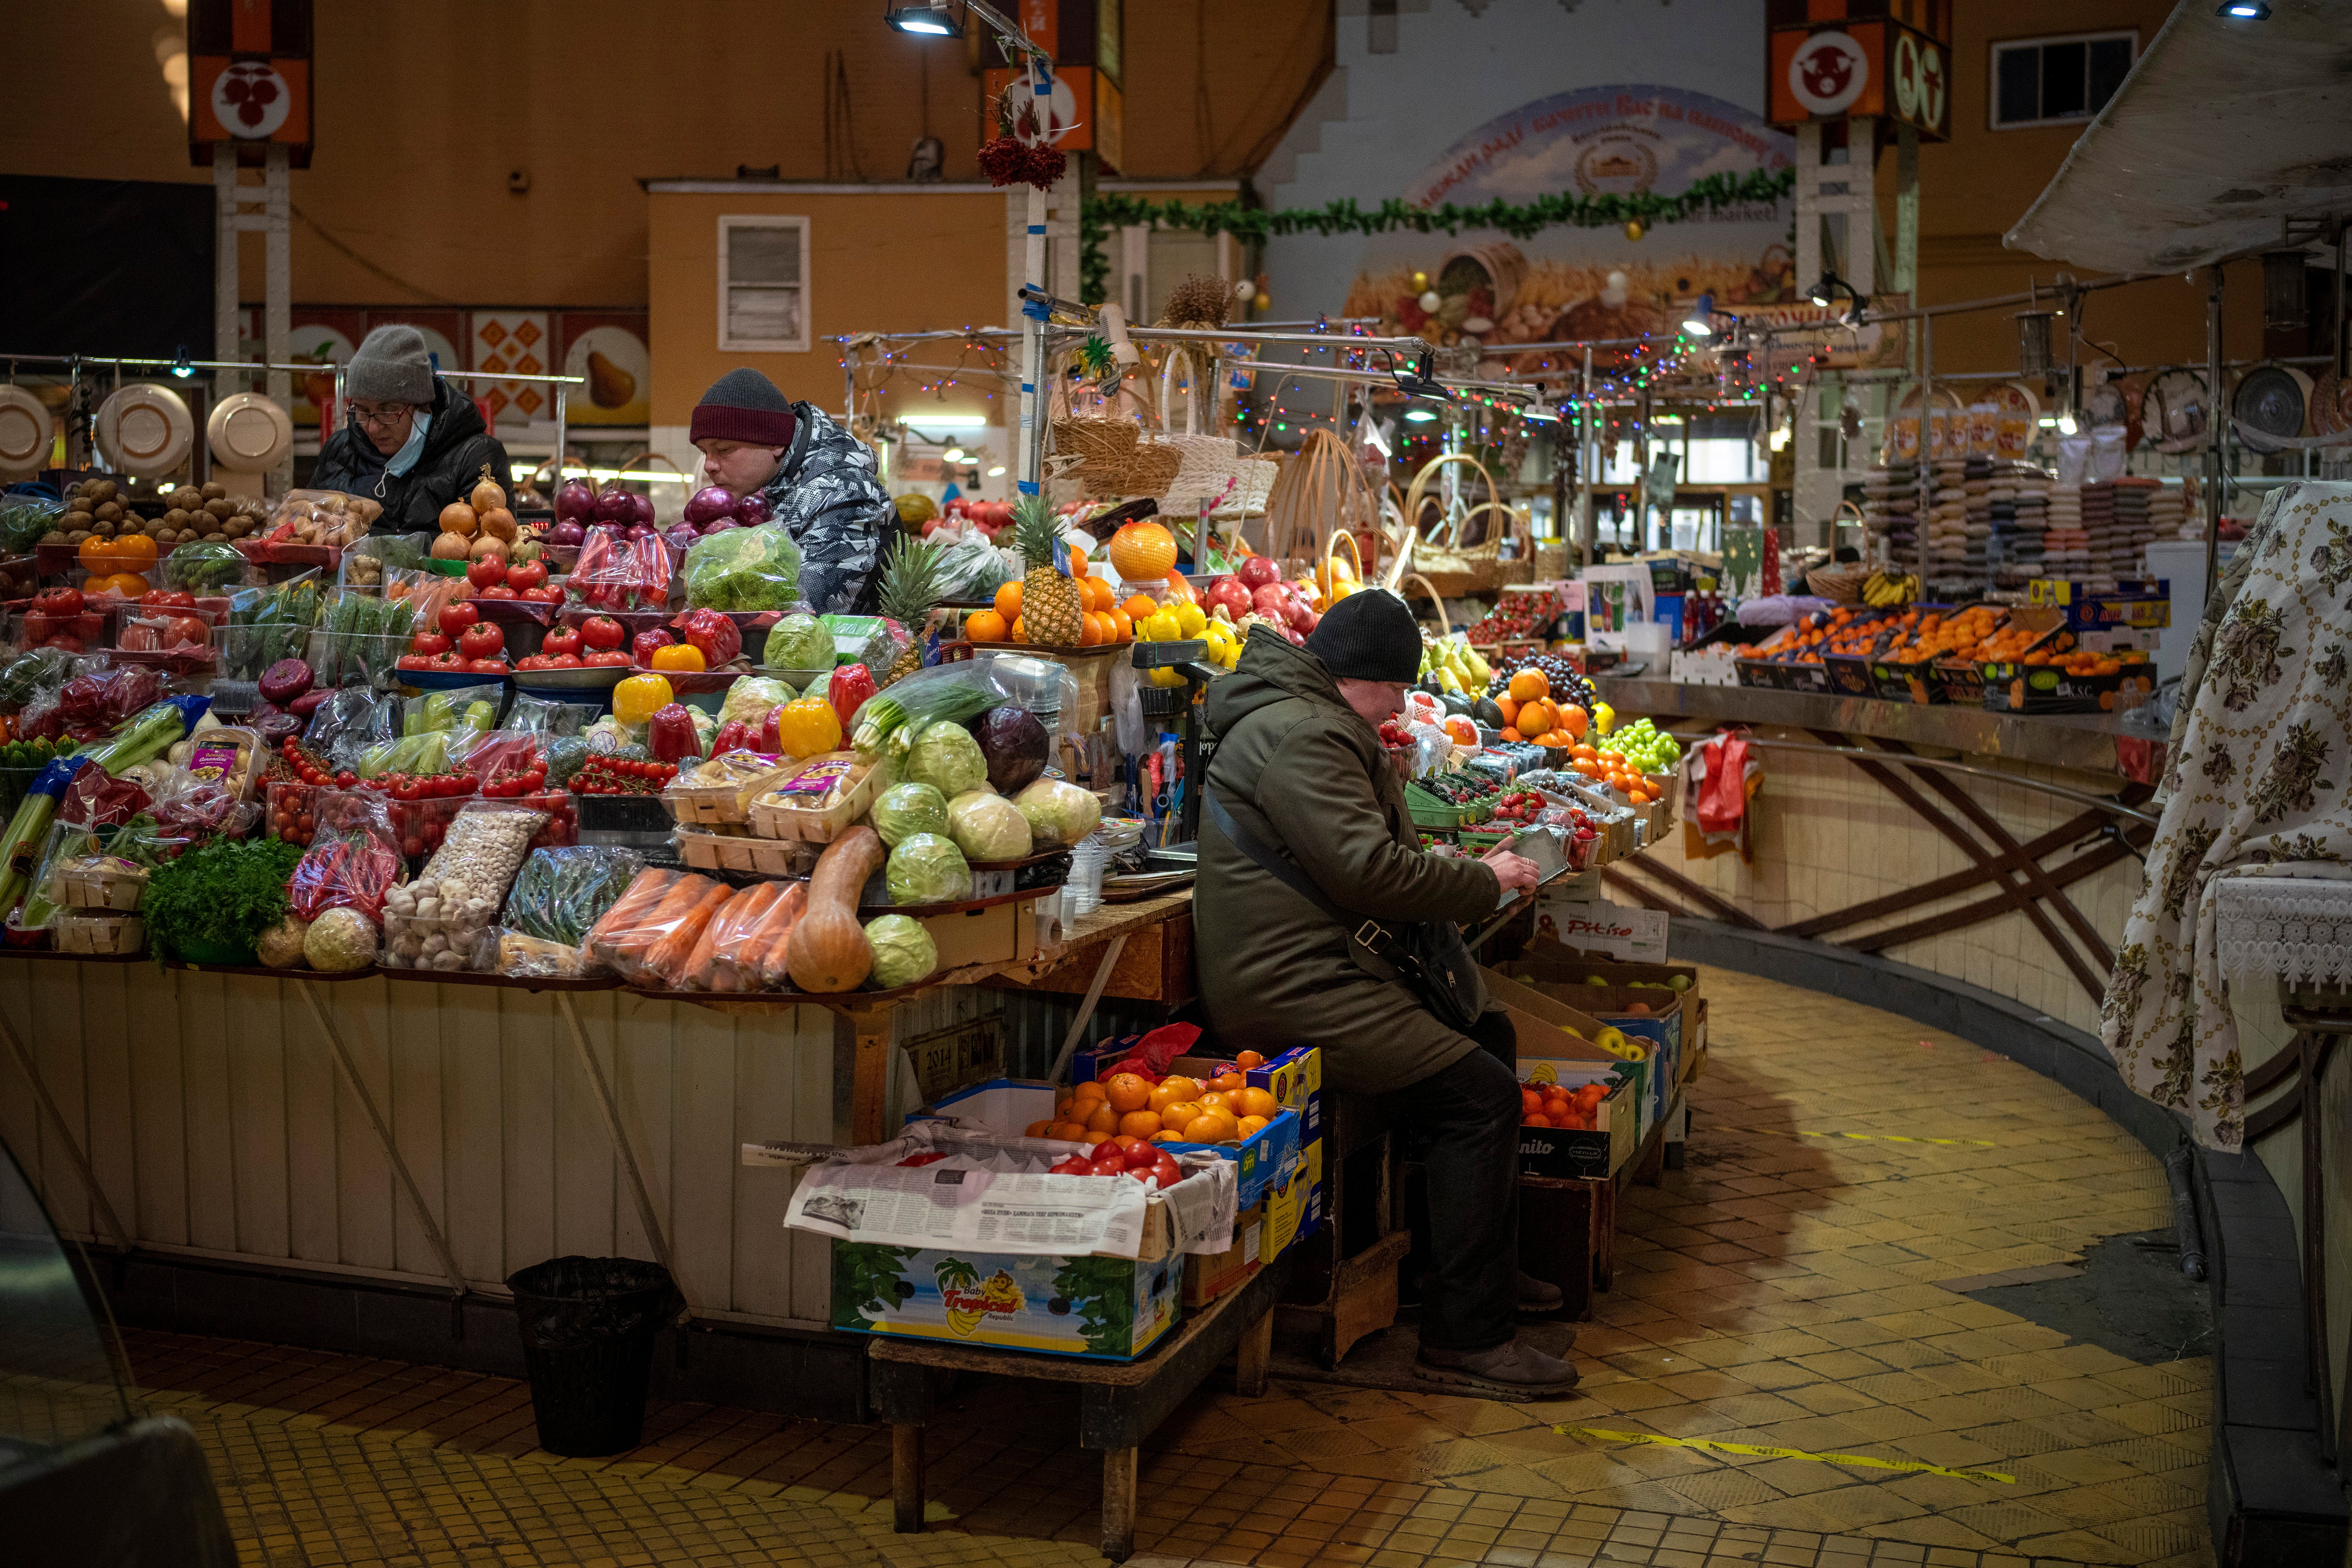 Vendors wait for customers at their fruit market stall in Kyiv, Ukraine (Emilio Morenatti/AP/Press Association Images)